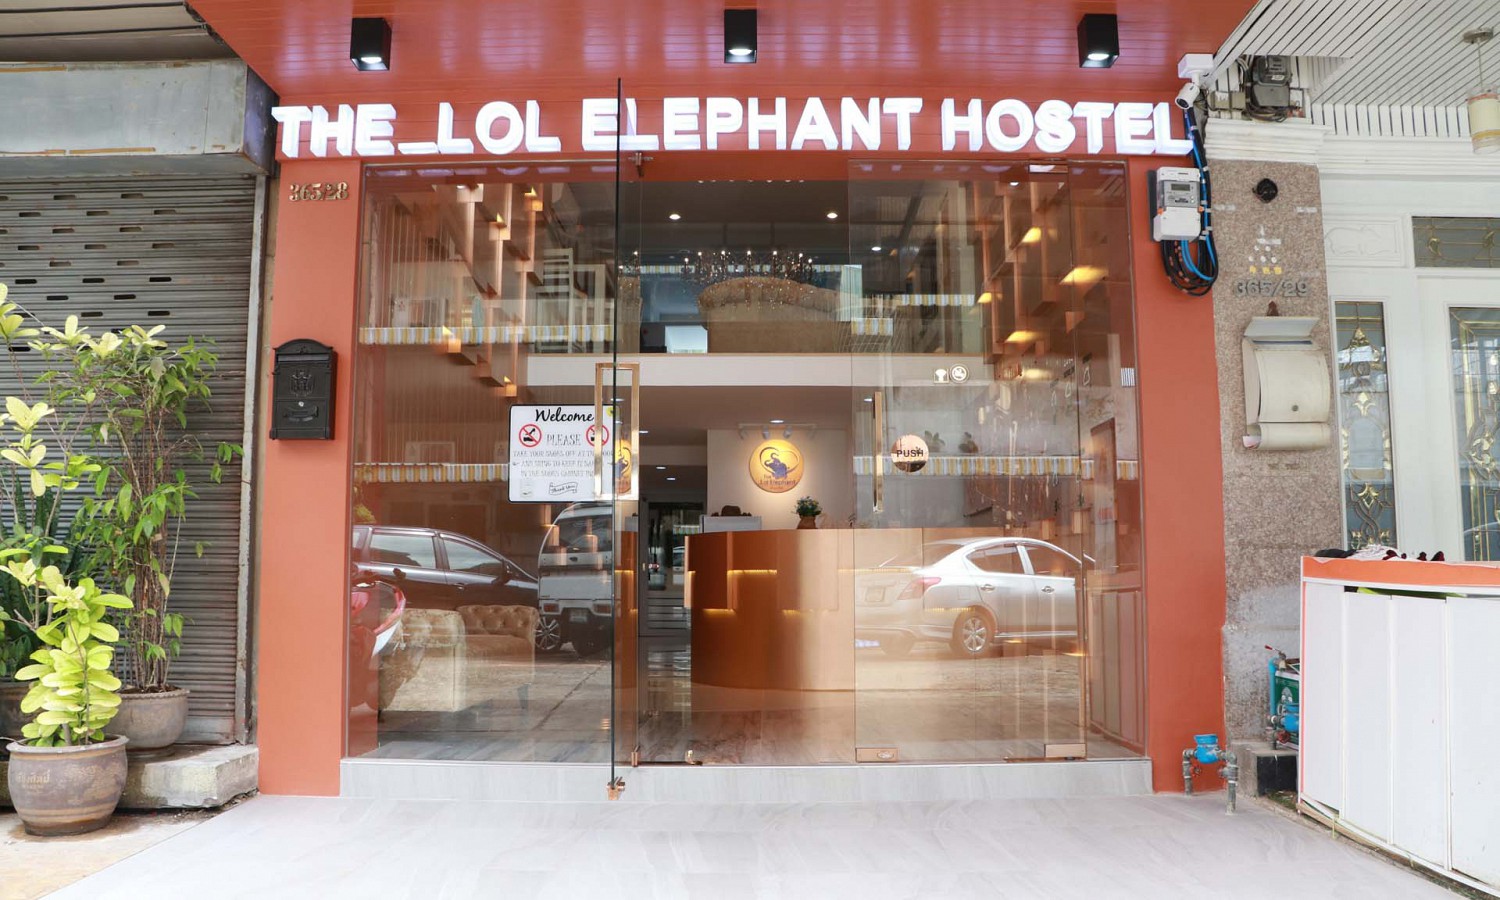 The Lol Elephant Hostel